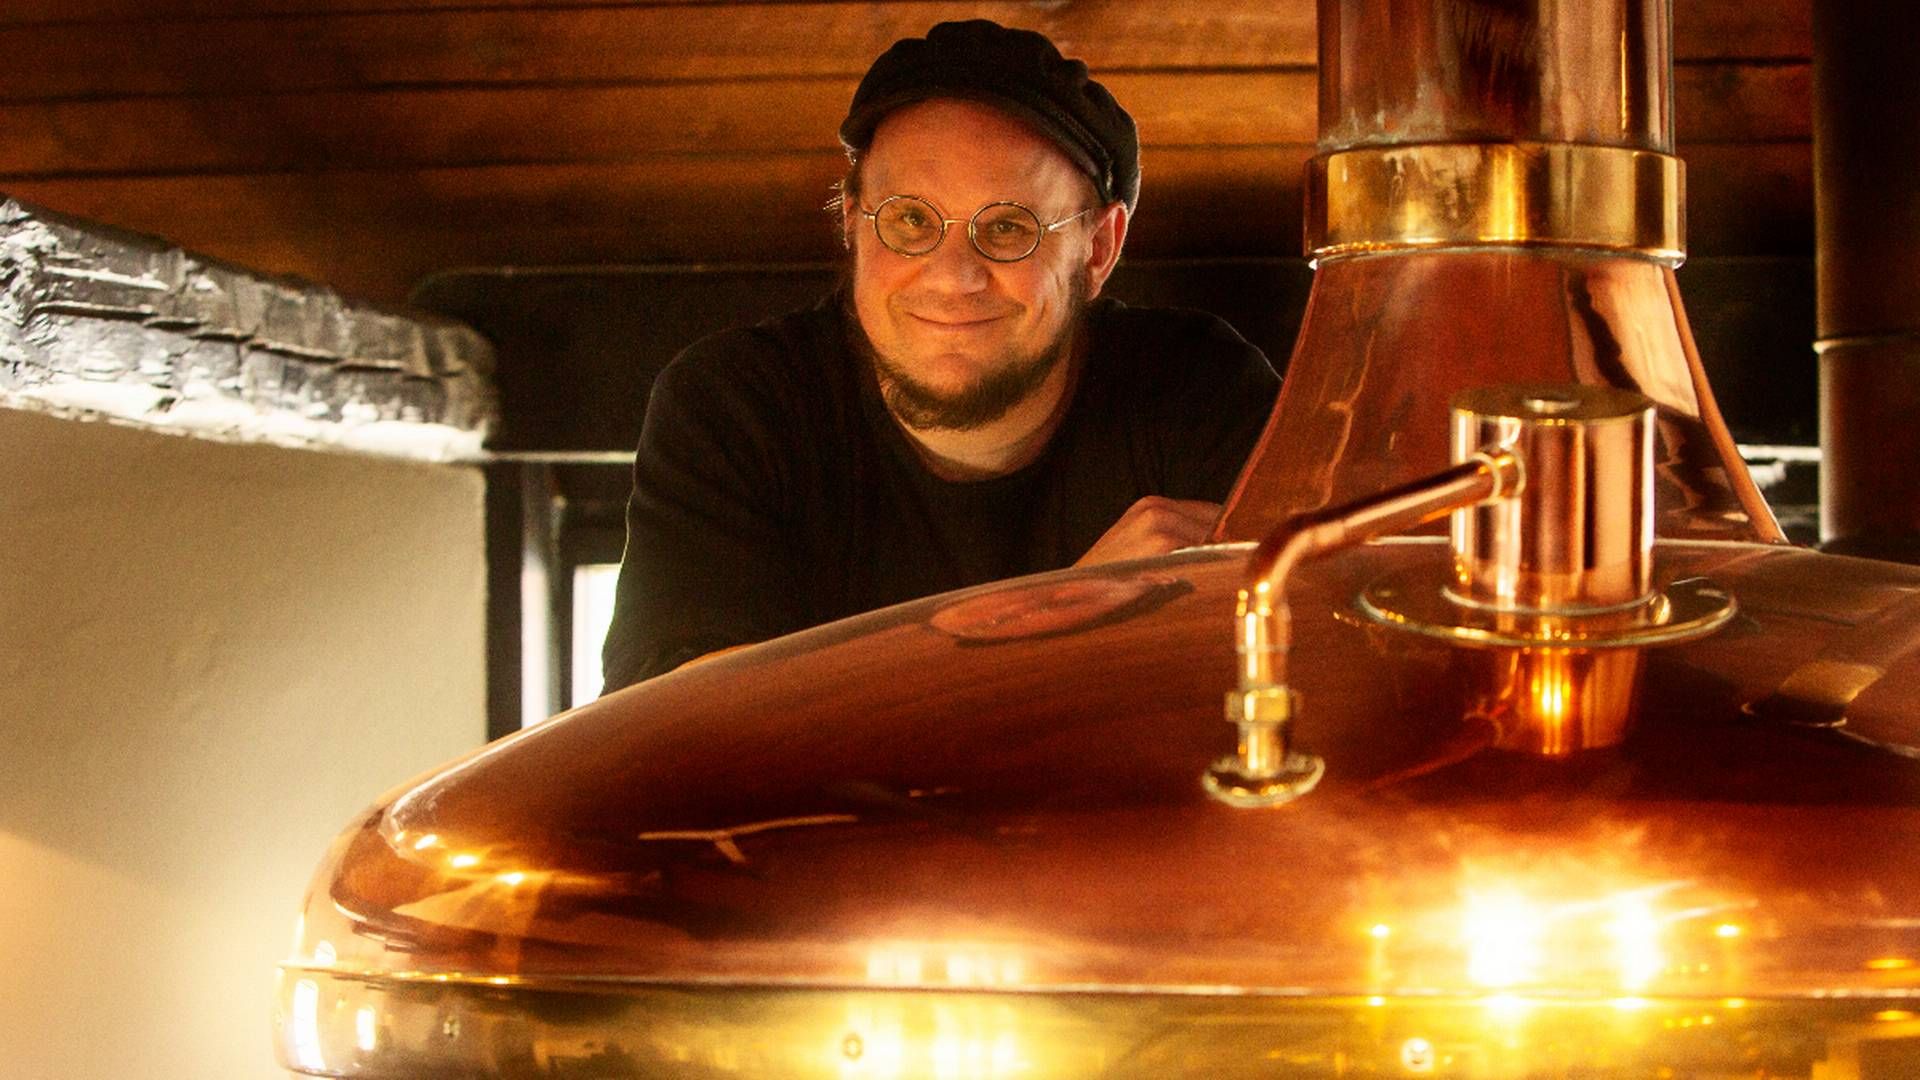 Jan Paul stopper til august efter 18 år som brygmester hos Svaneke Bryghus. | Foto: Kasper Buchardt, Pr/ Svaneke Bryghus